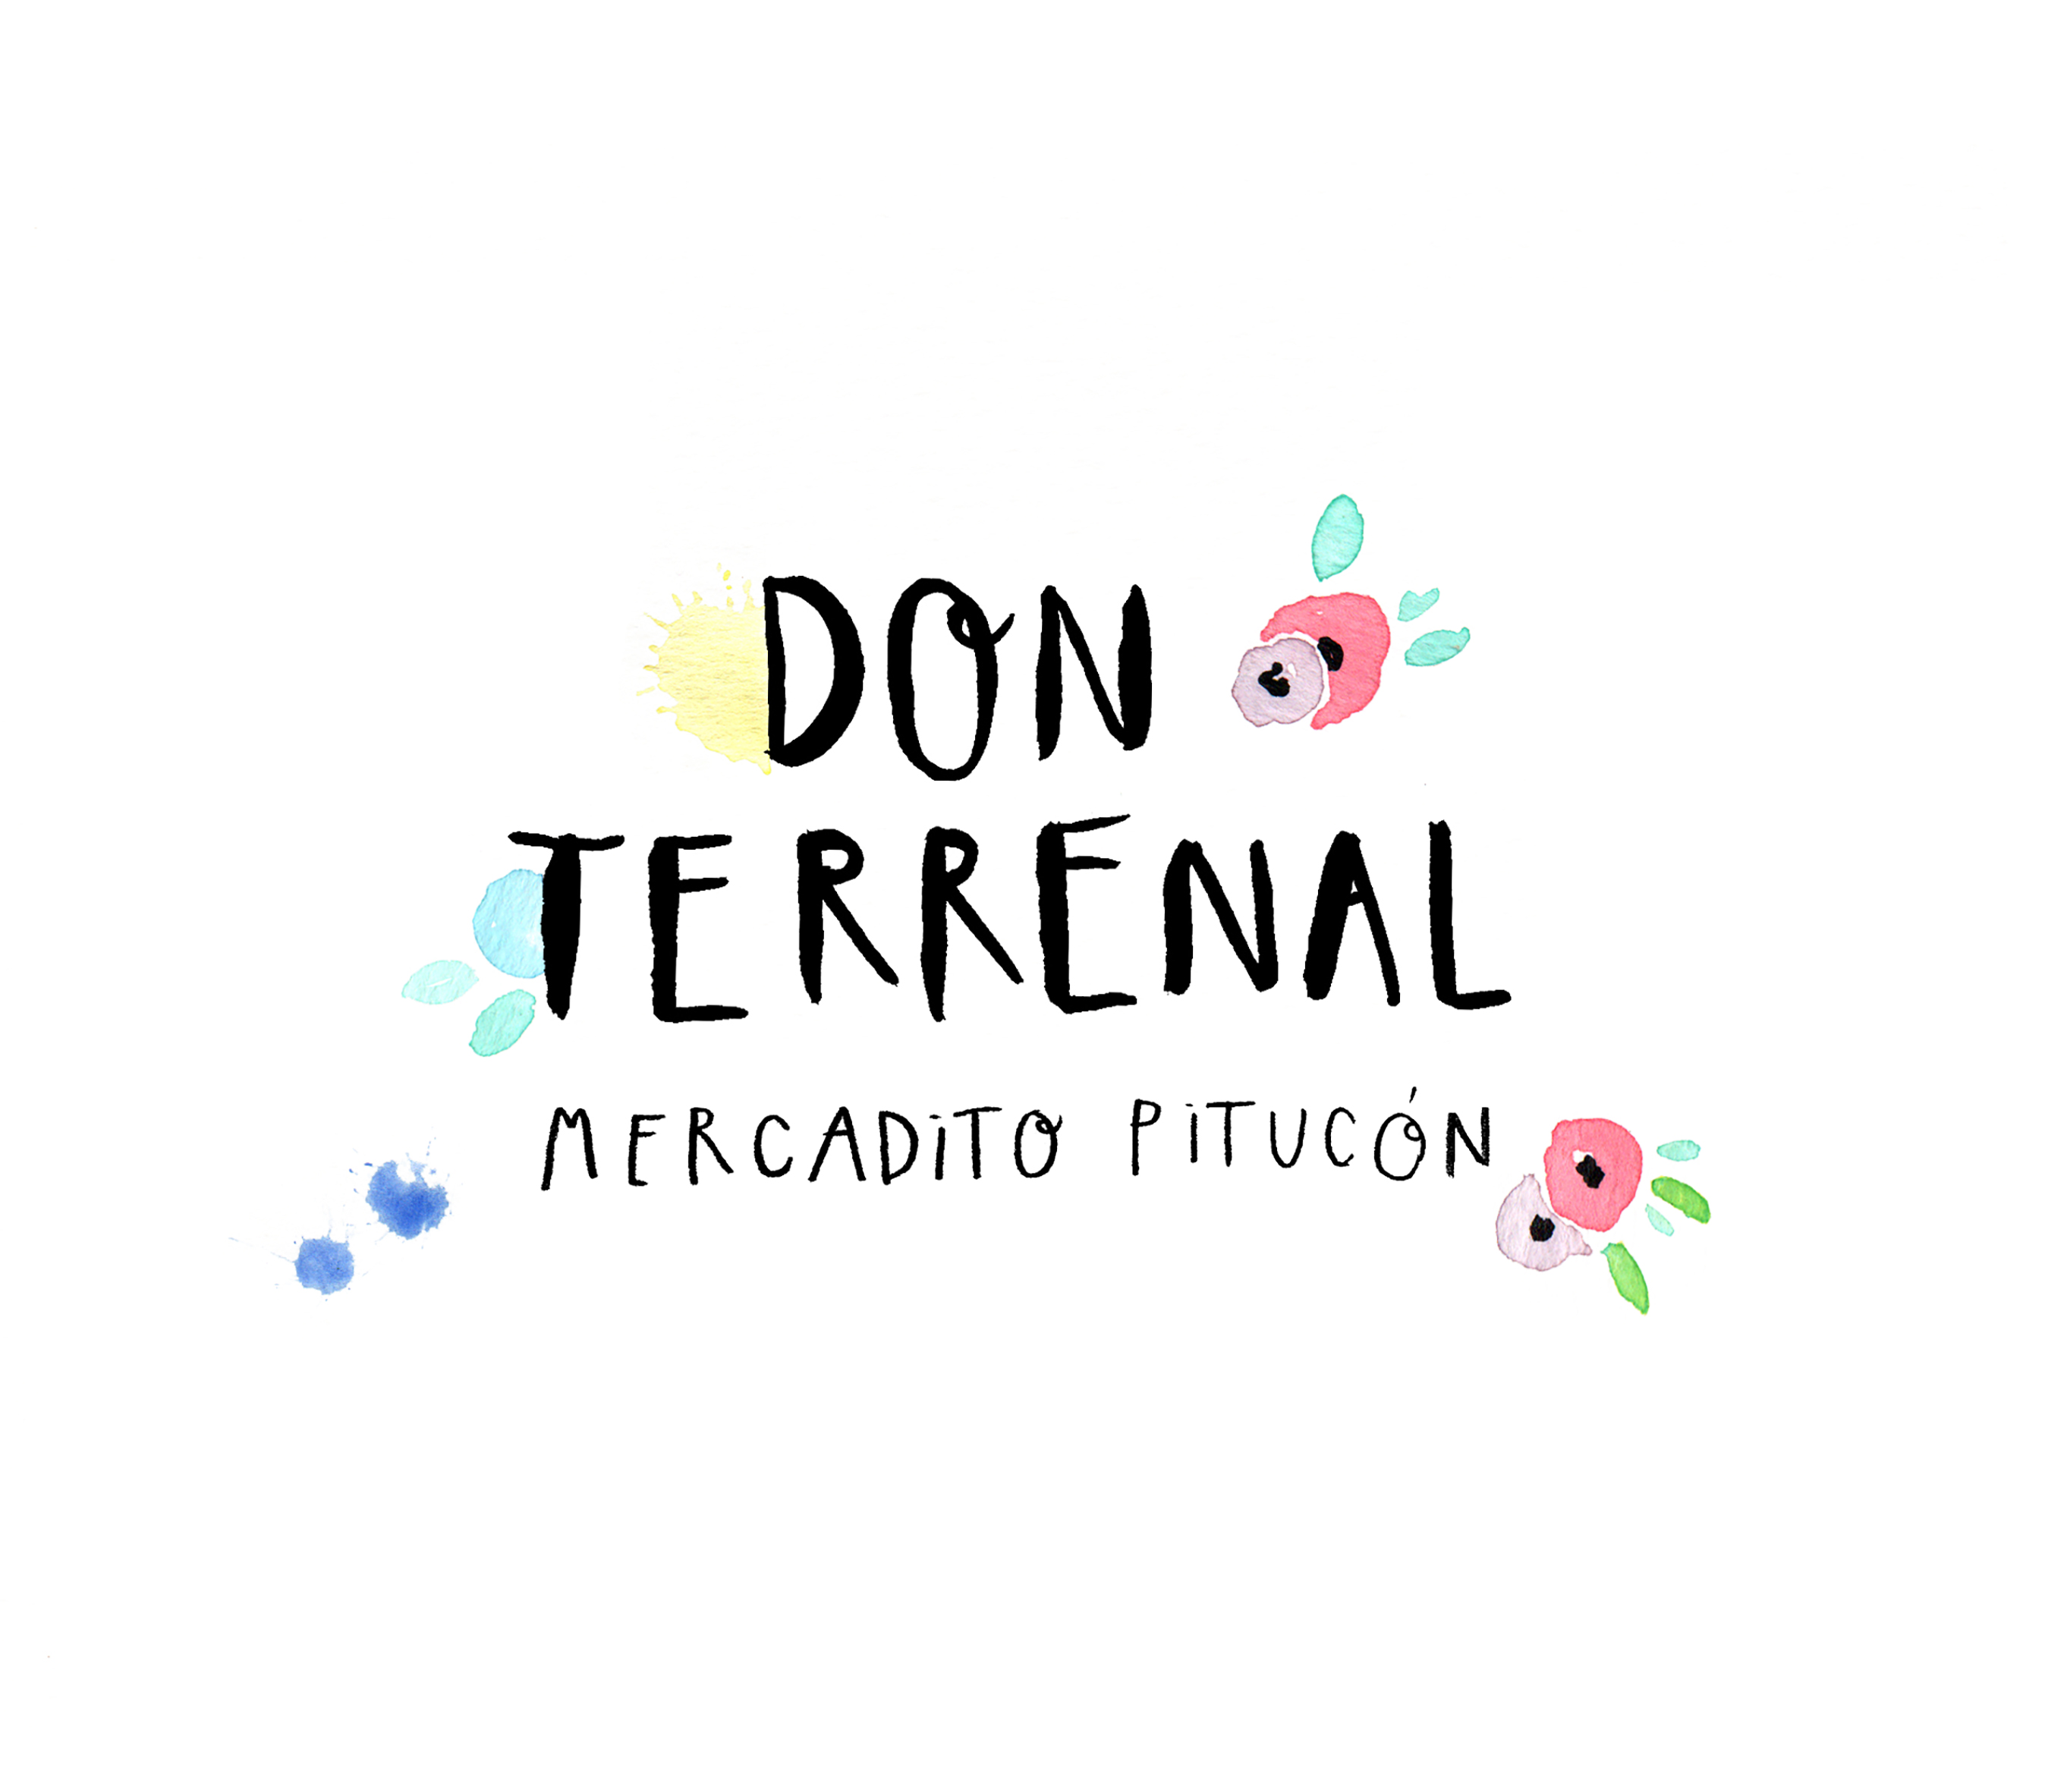 Don Terrenal